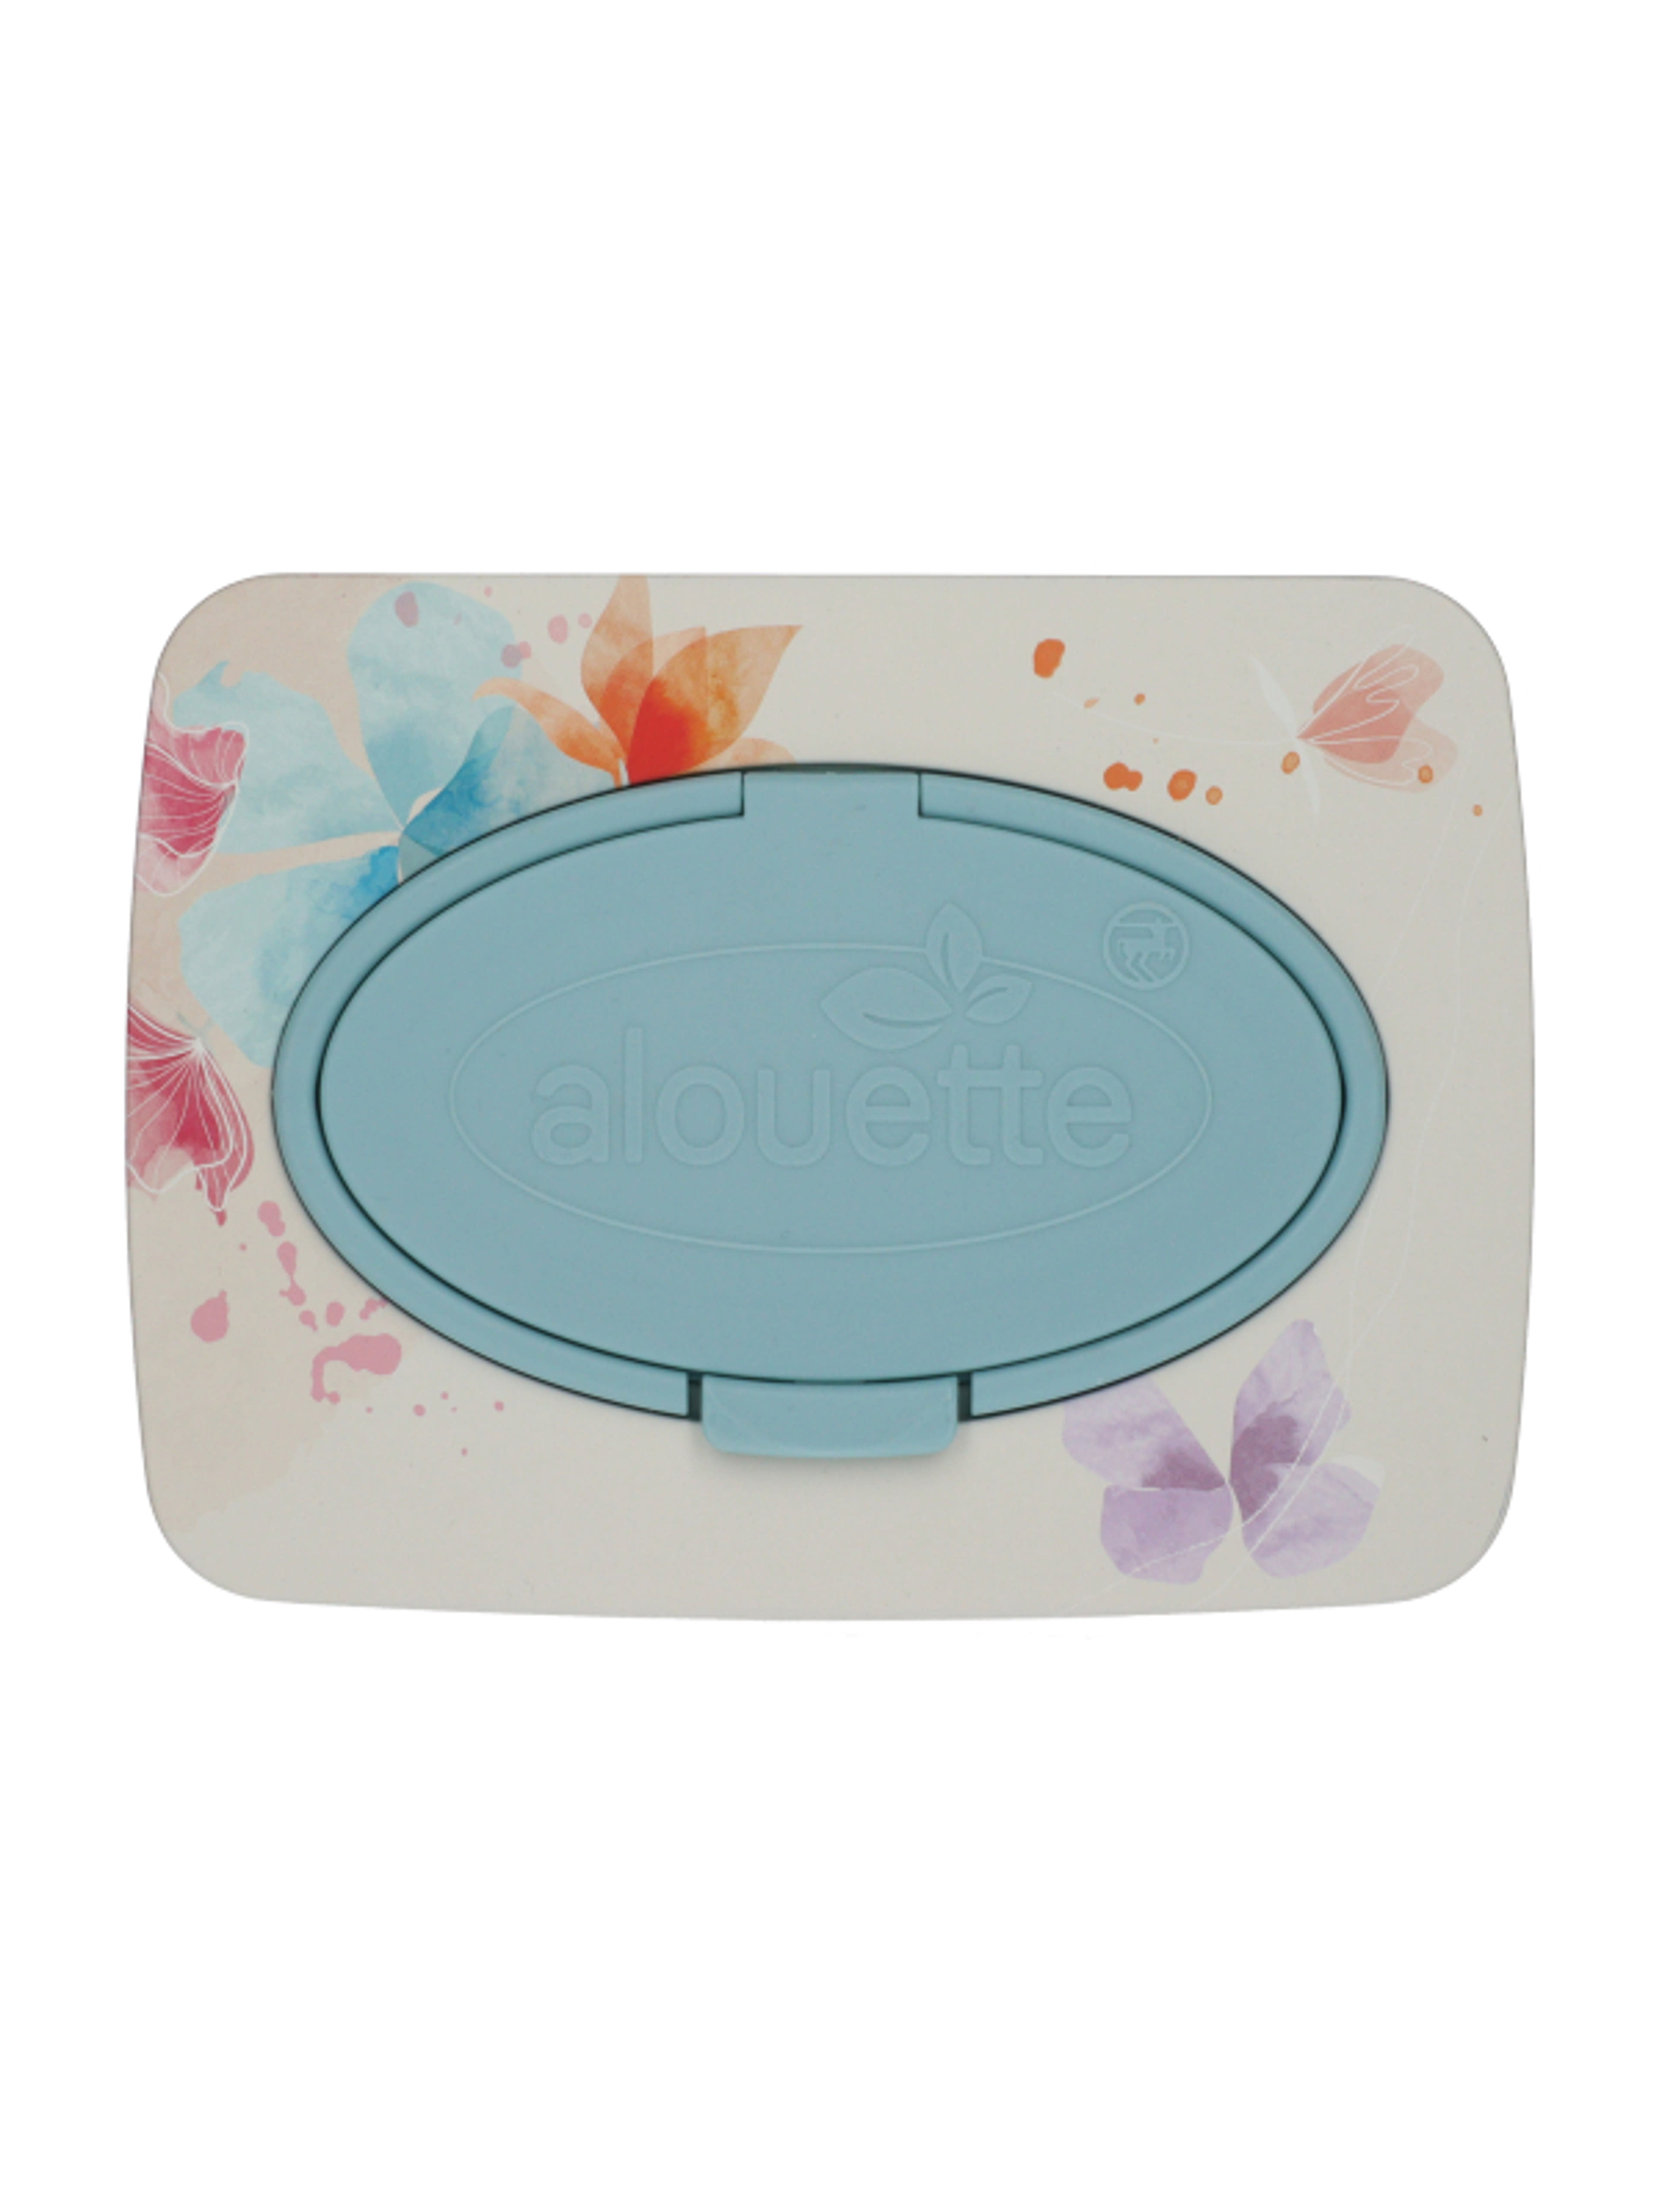 Alouette Box Sensitive nedves toalettpapír - 50 db-1